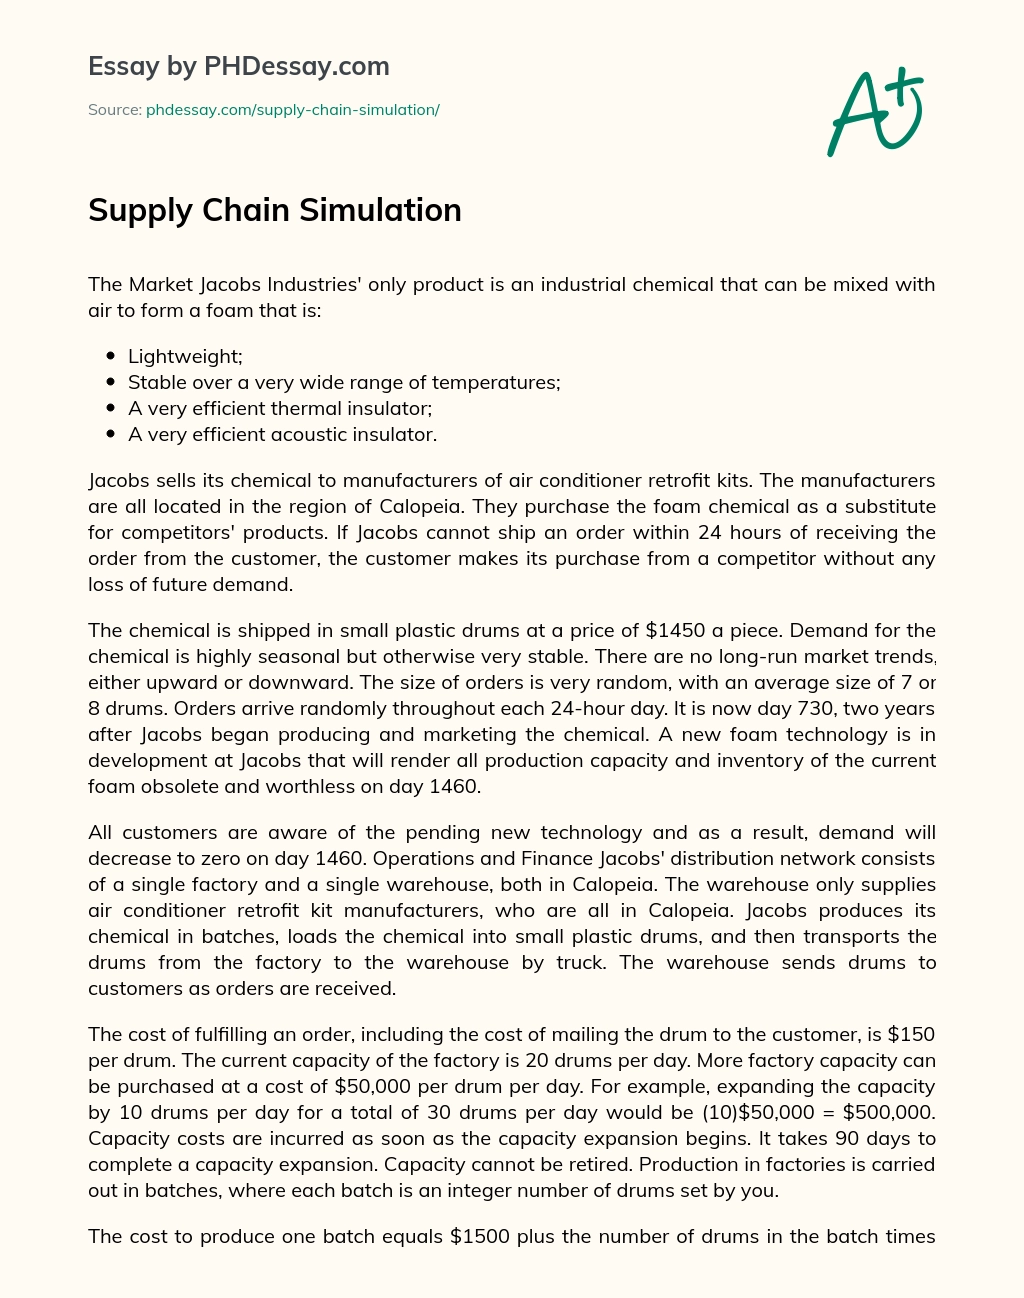 Supply Chain Simulation essay